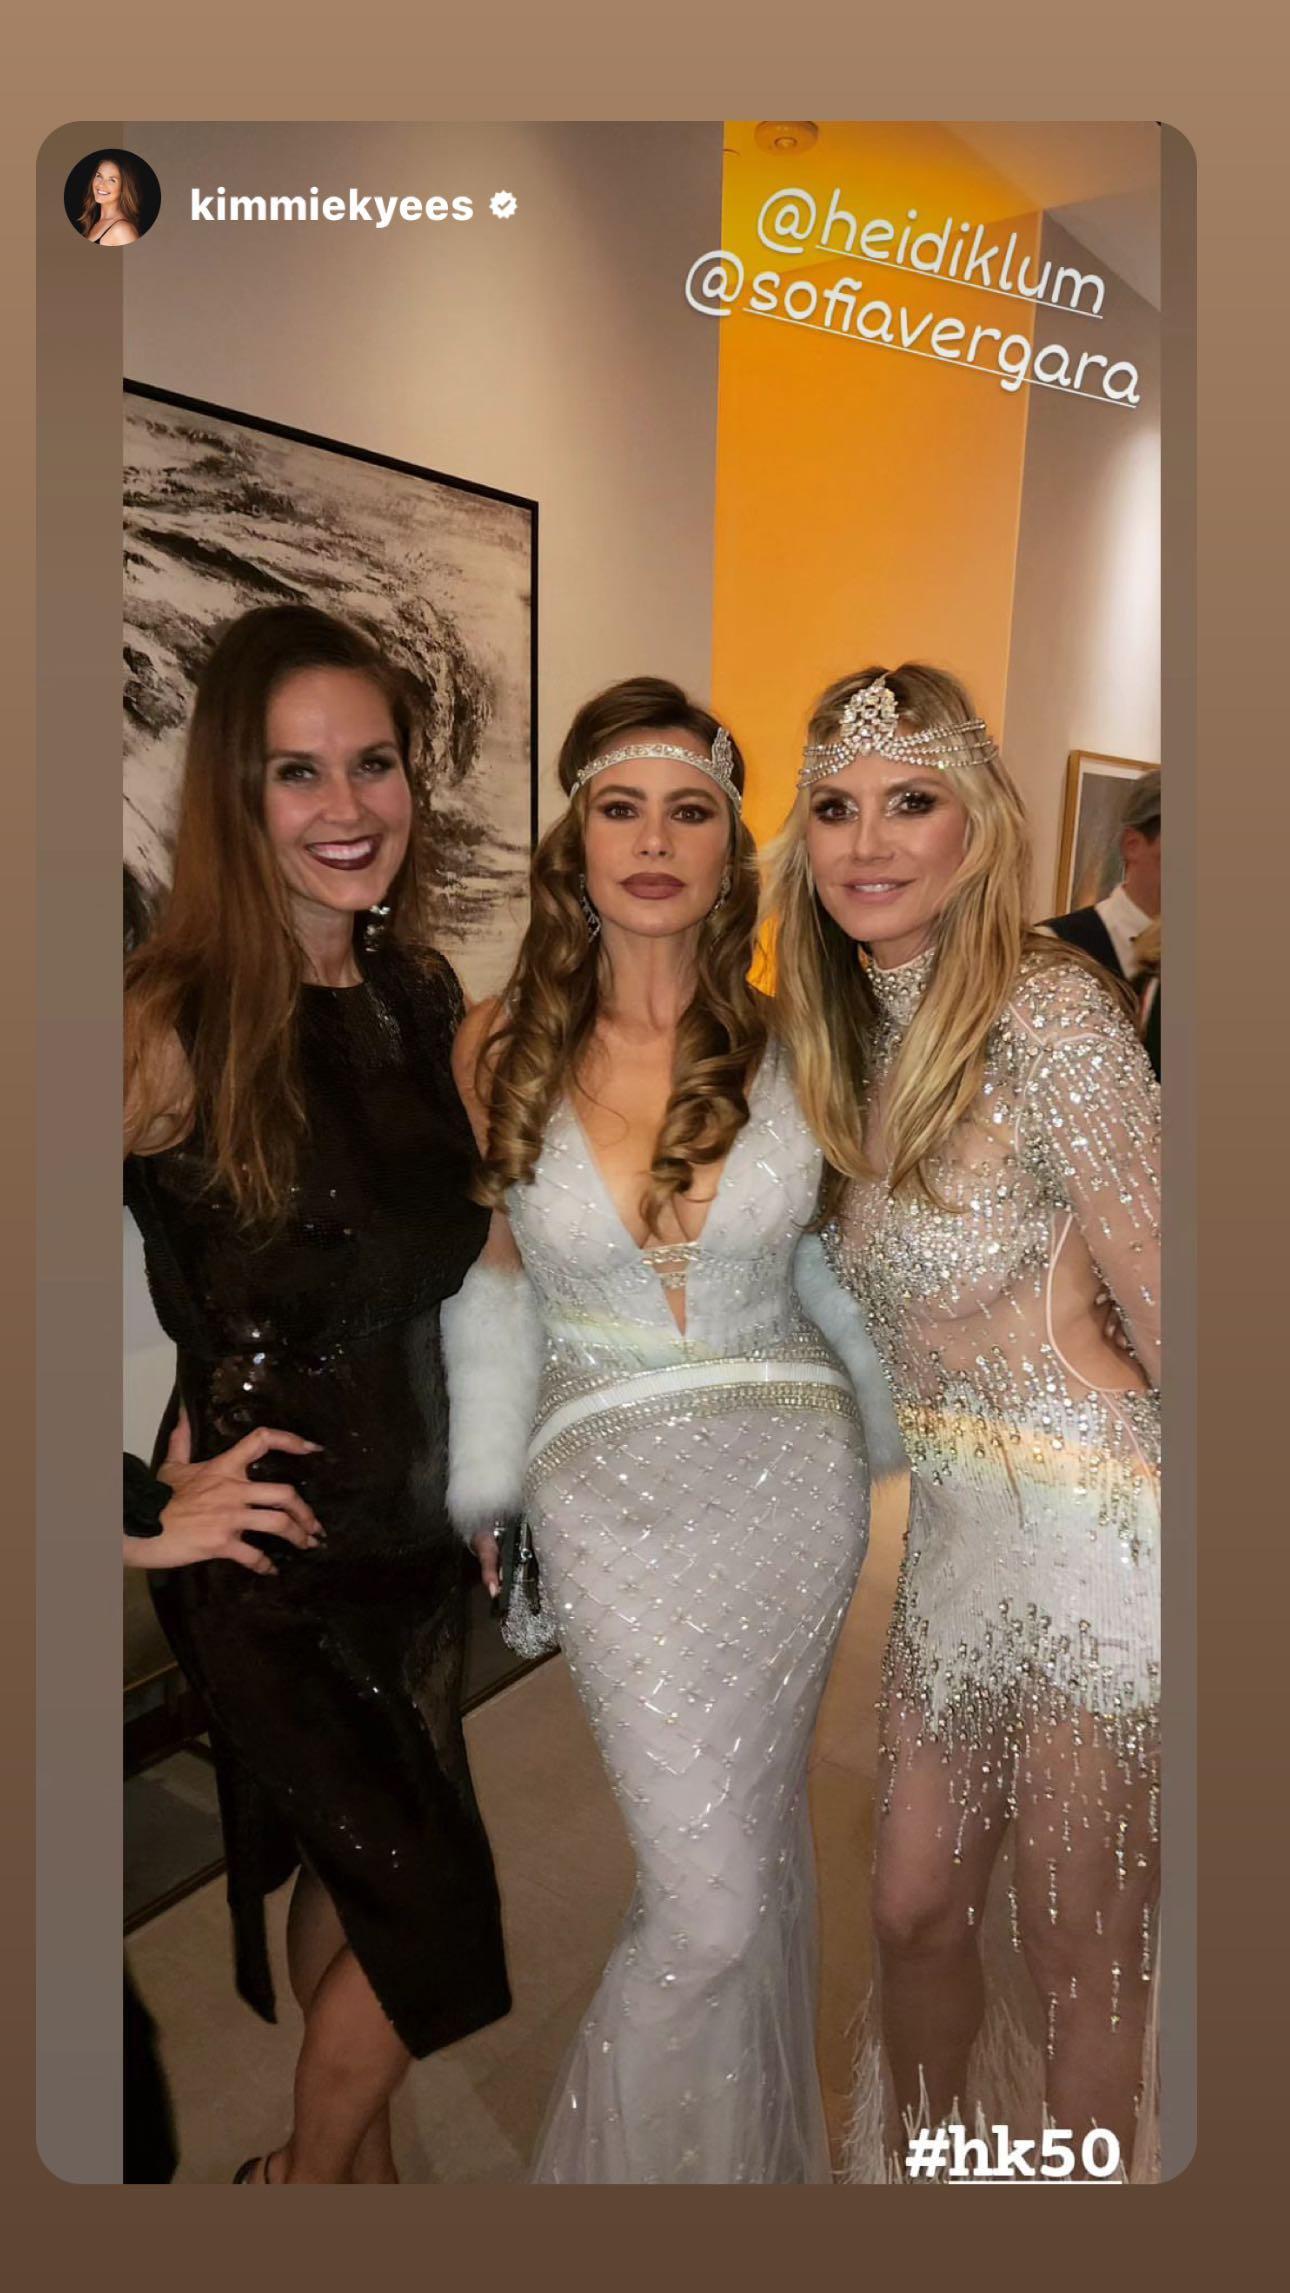 Sofia Vergara and Heidi Klum at her 50th birthday party